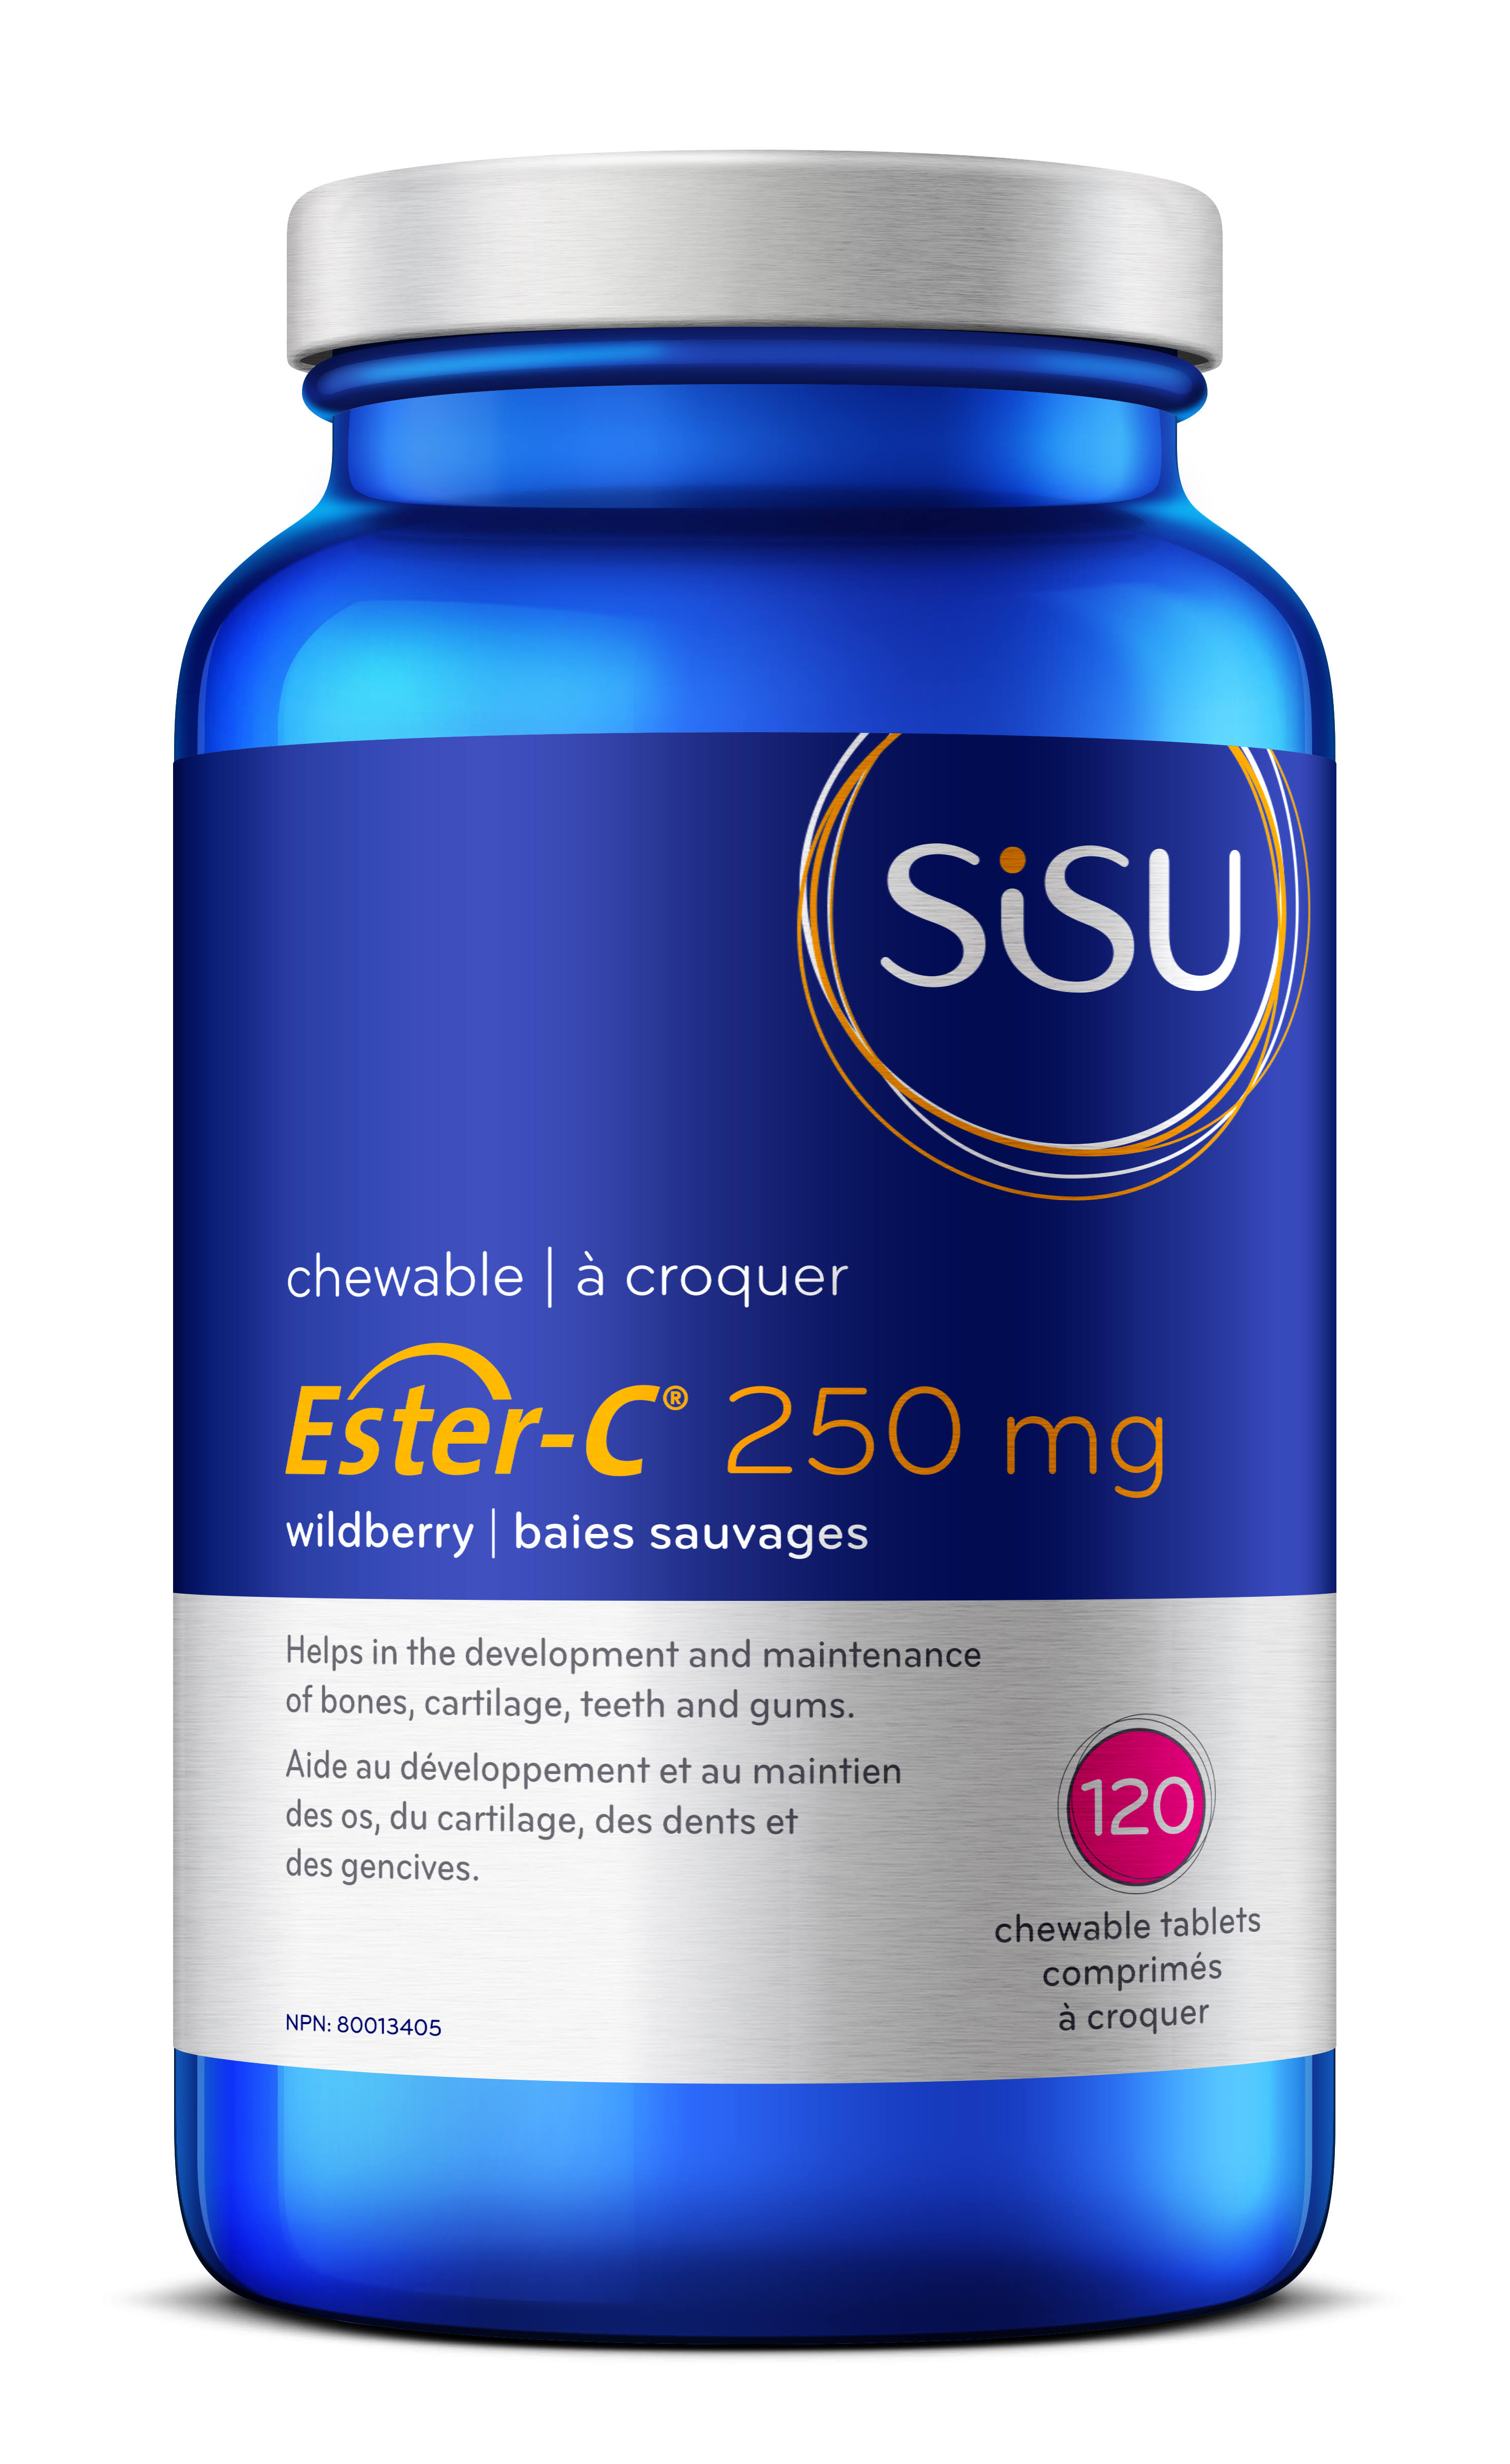 Sisu Ester C Chewable Orange Supplement Tablets - 250mg, 120ct